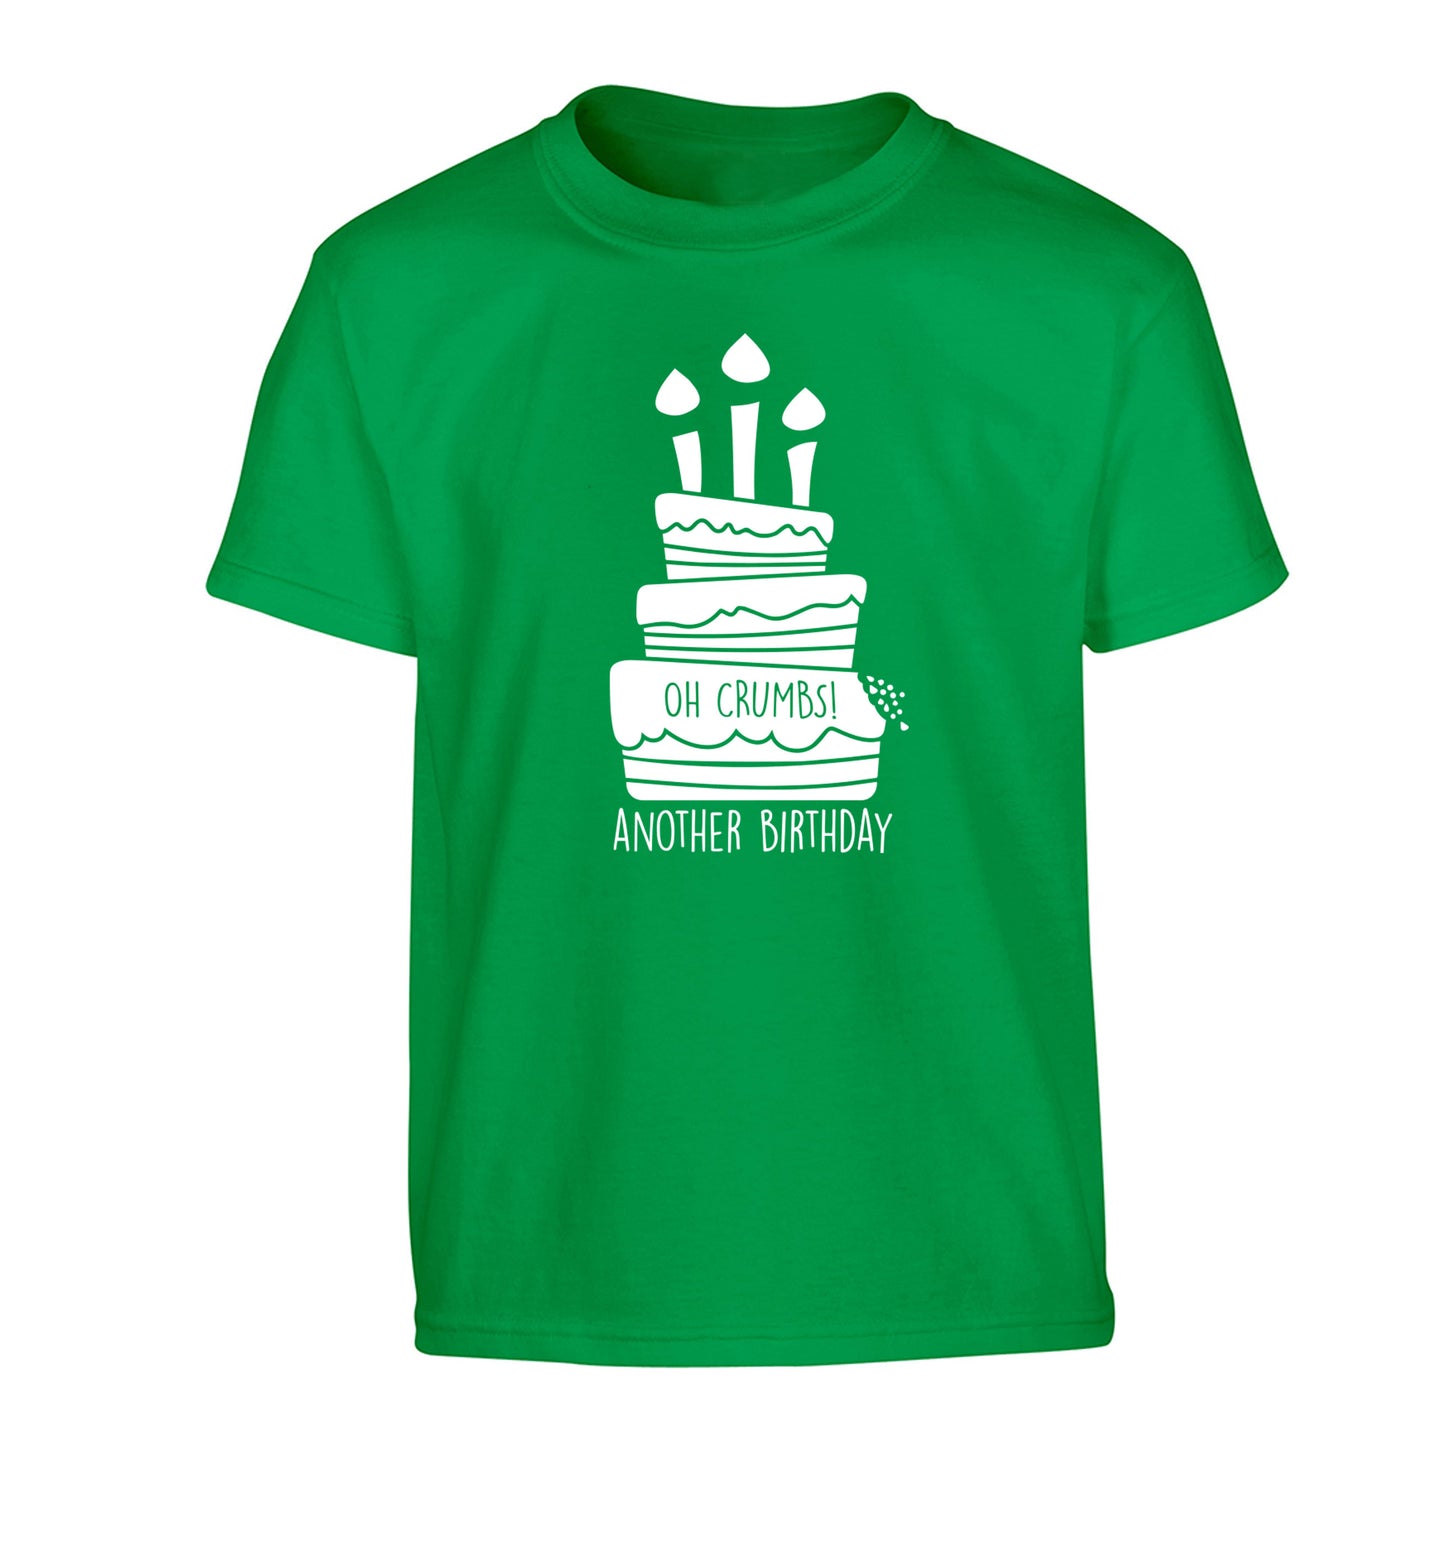 Oh crumbs another birthday! Children's green Tshirt 12-14 Years